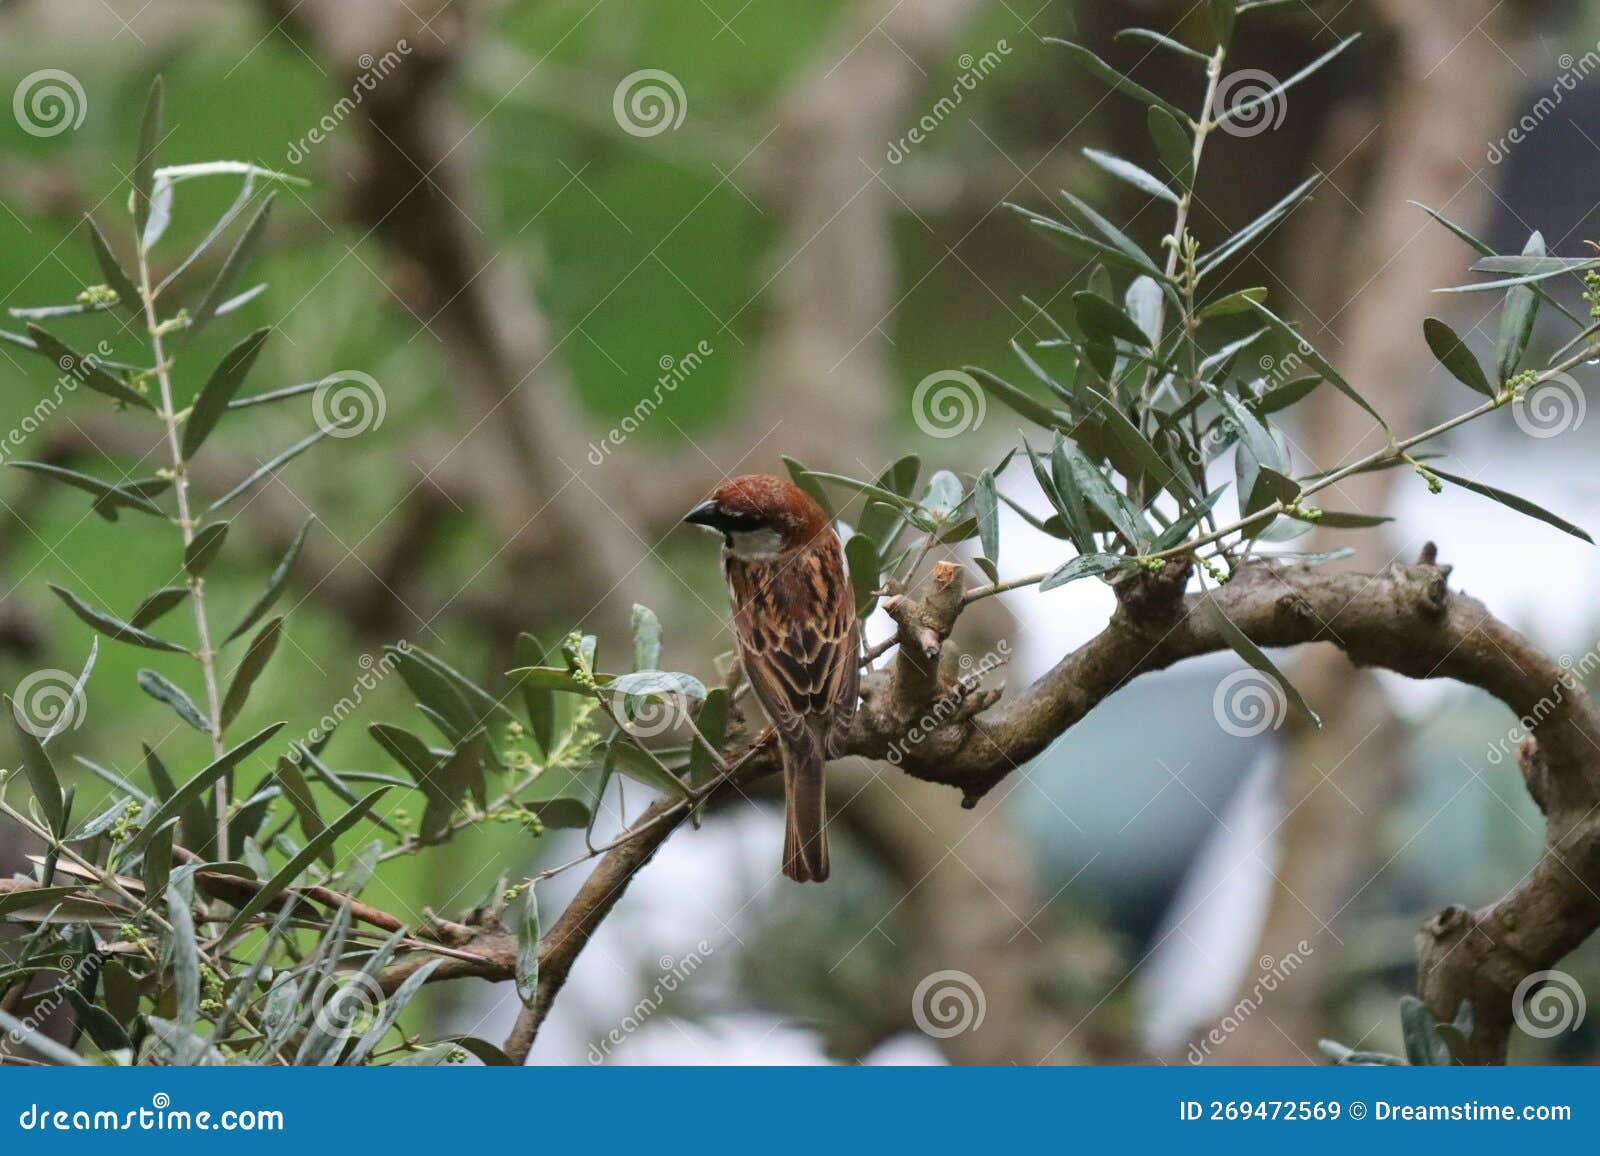 little bird on a branch of olive tree. passer italiane.